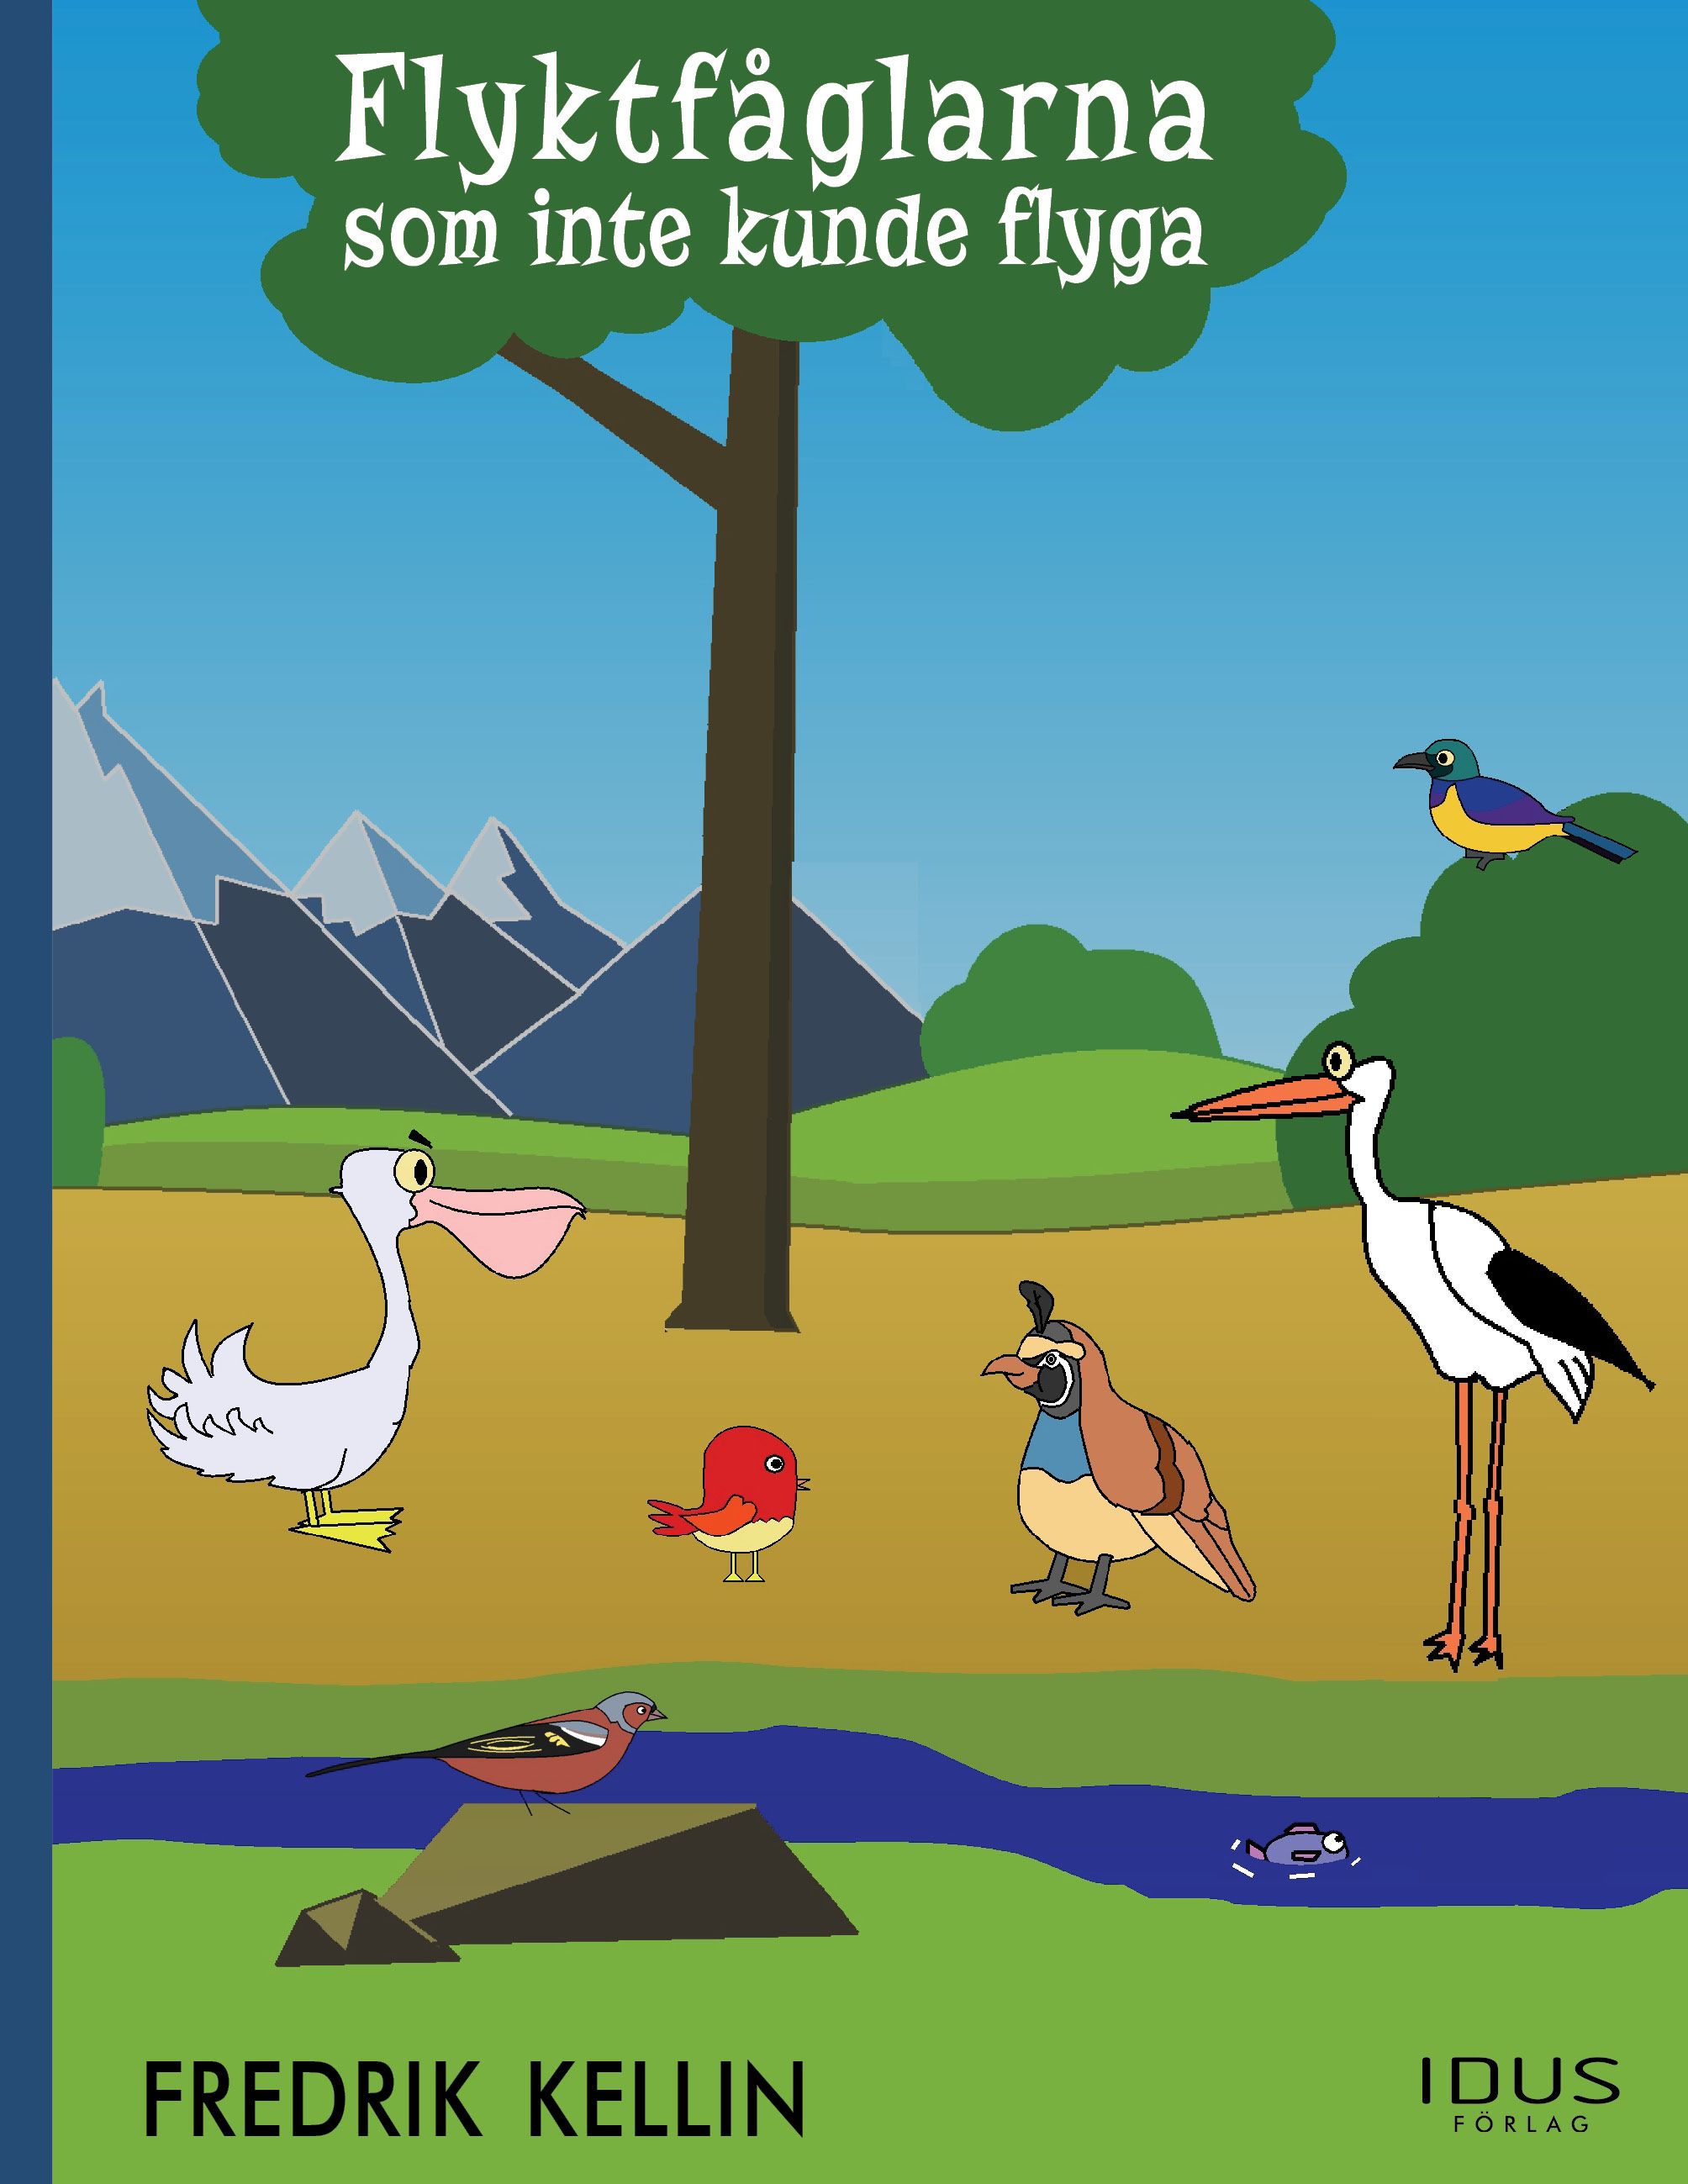 Flyktfåglarna som inte kunde flyga, e-bog af Fredrik Kellin